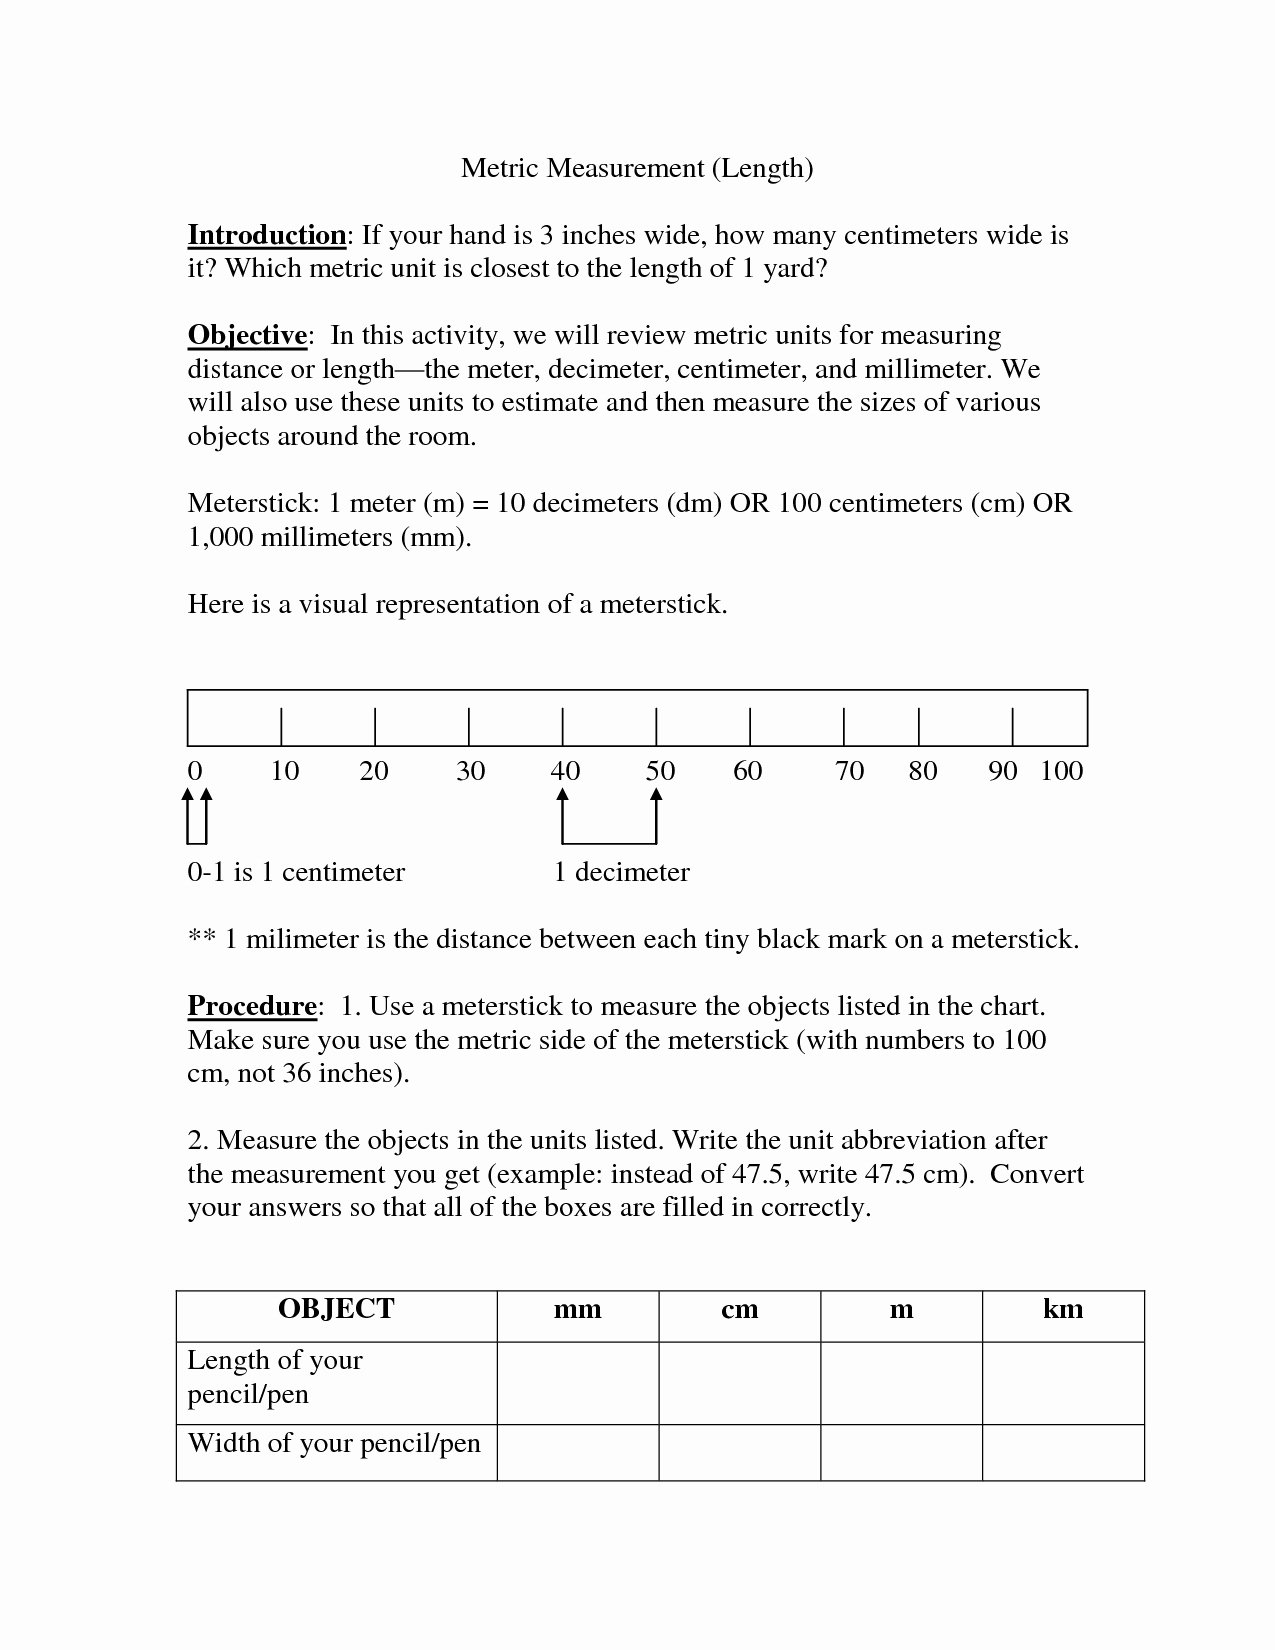 Metrics and Measurement Worksheet Answers Beautiful 5 6 Metric Units Chart